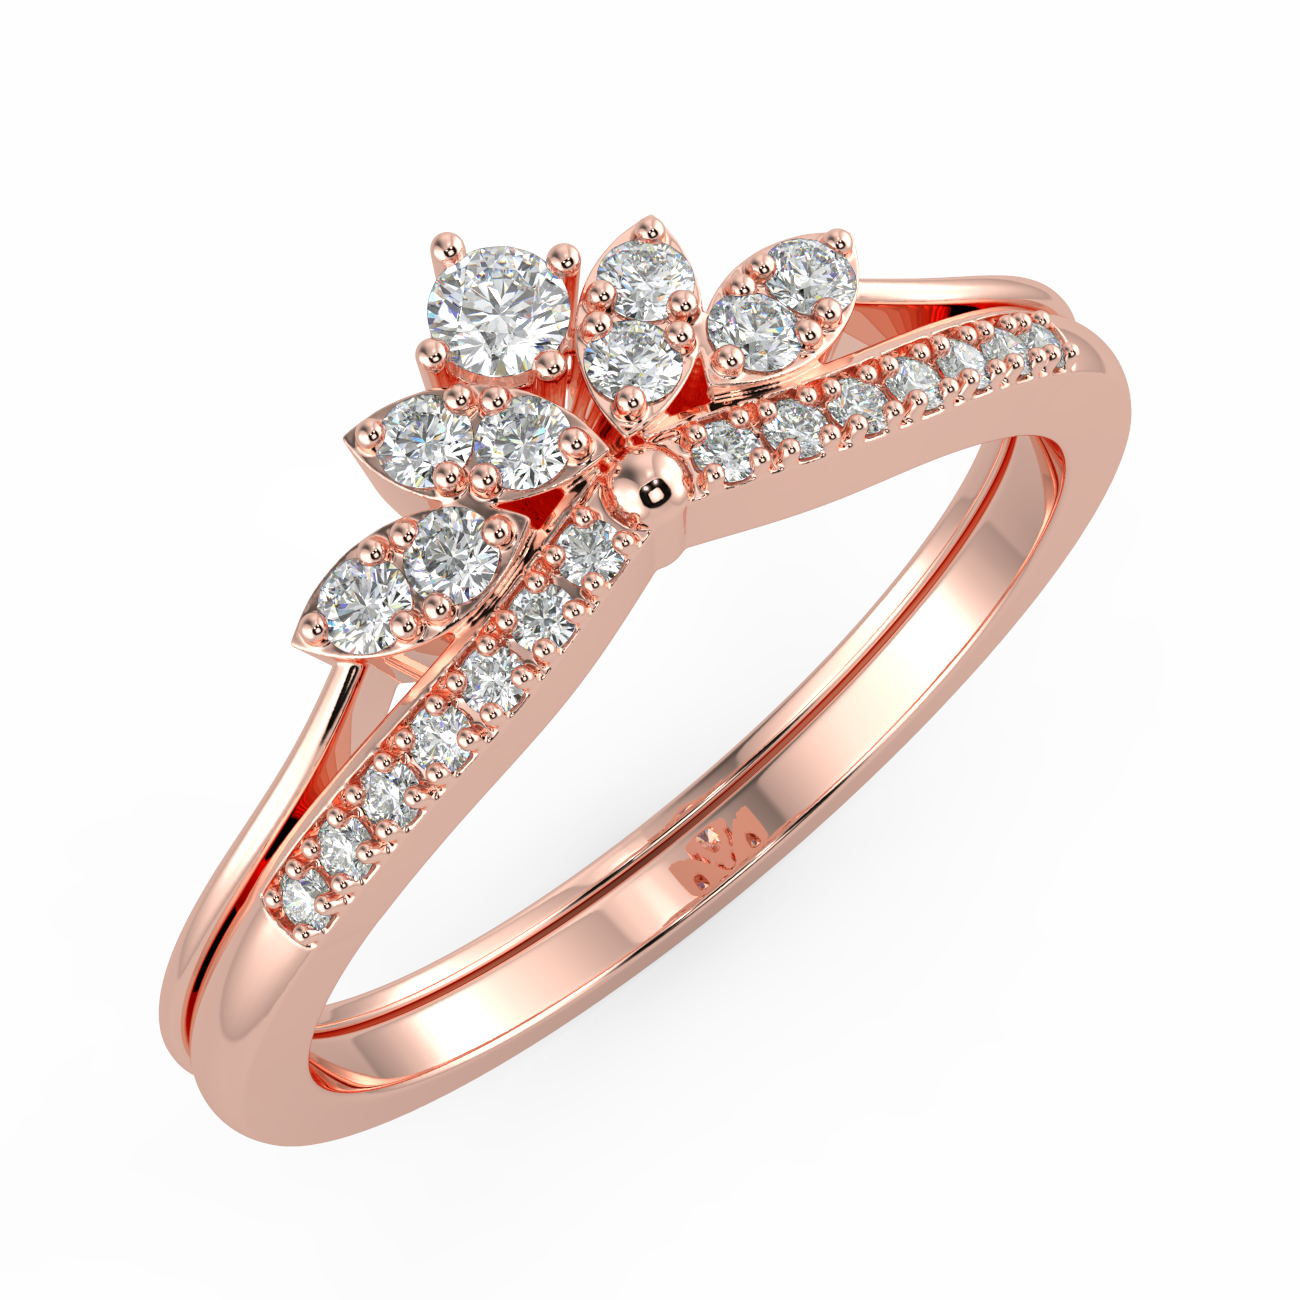 Tiara Diamond Wedding Ring from Australian Diamond Network